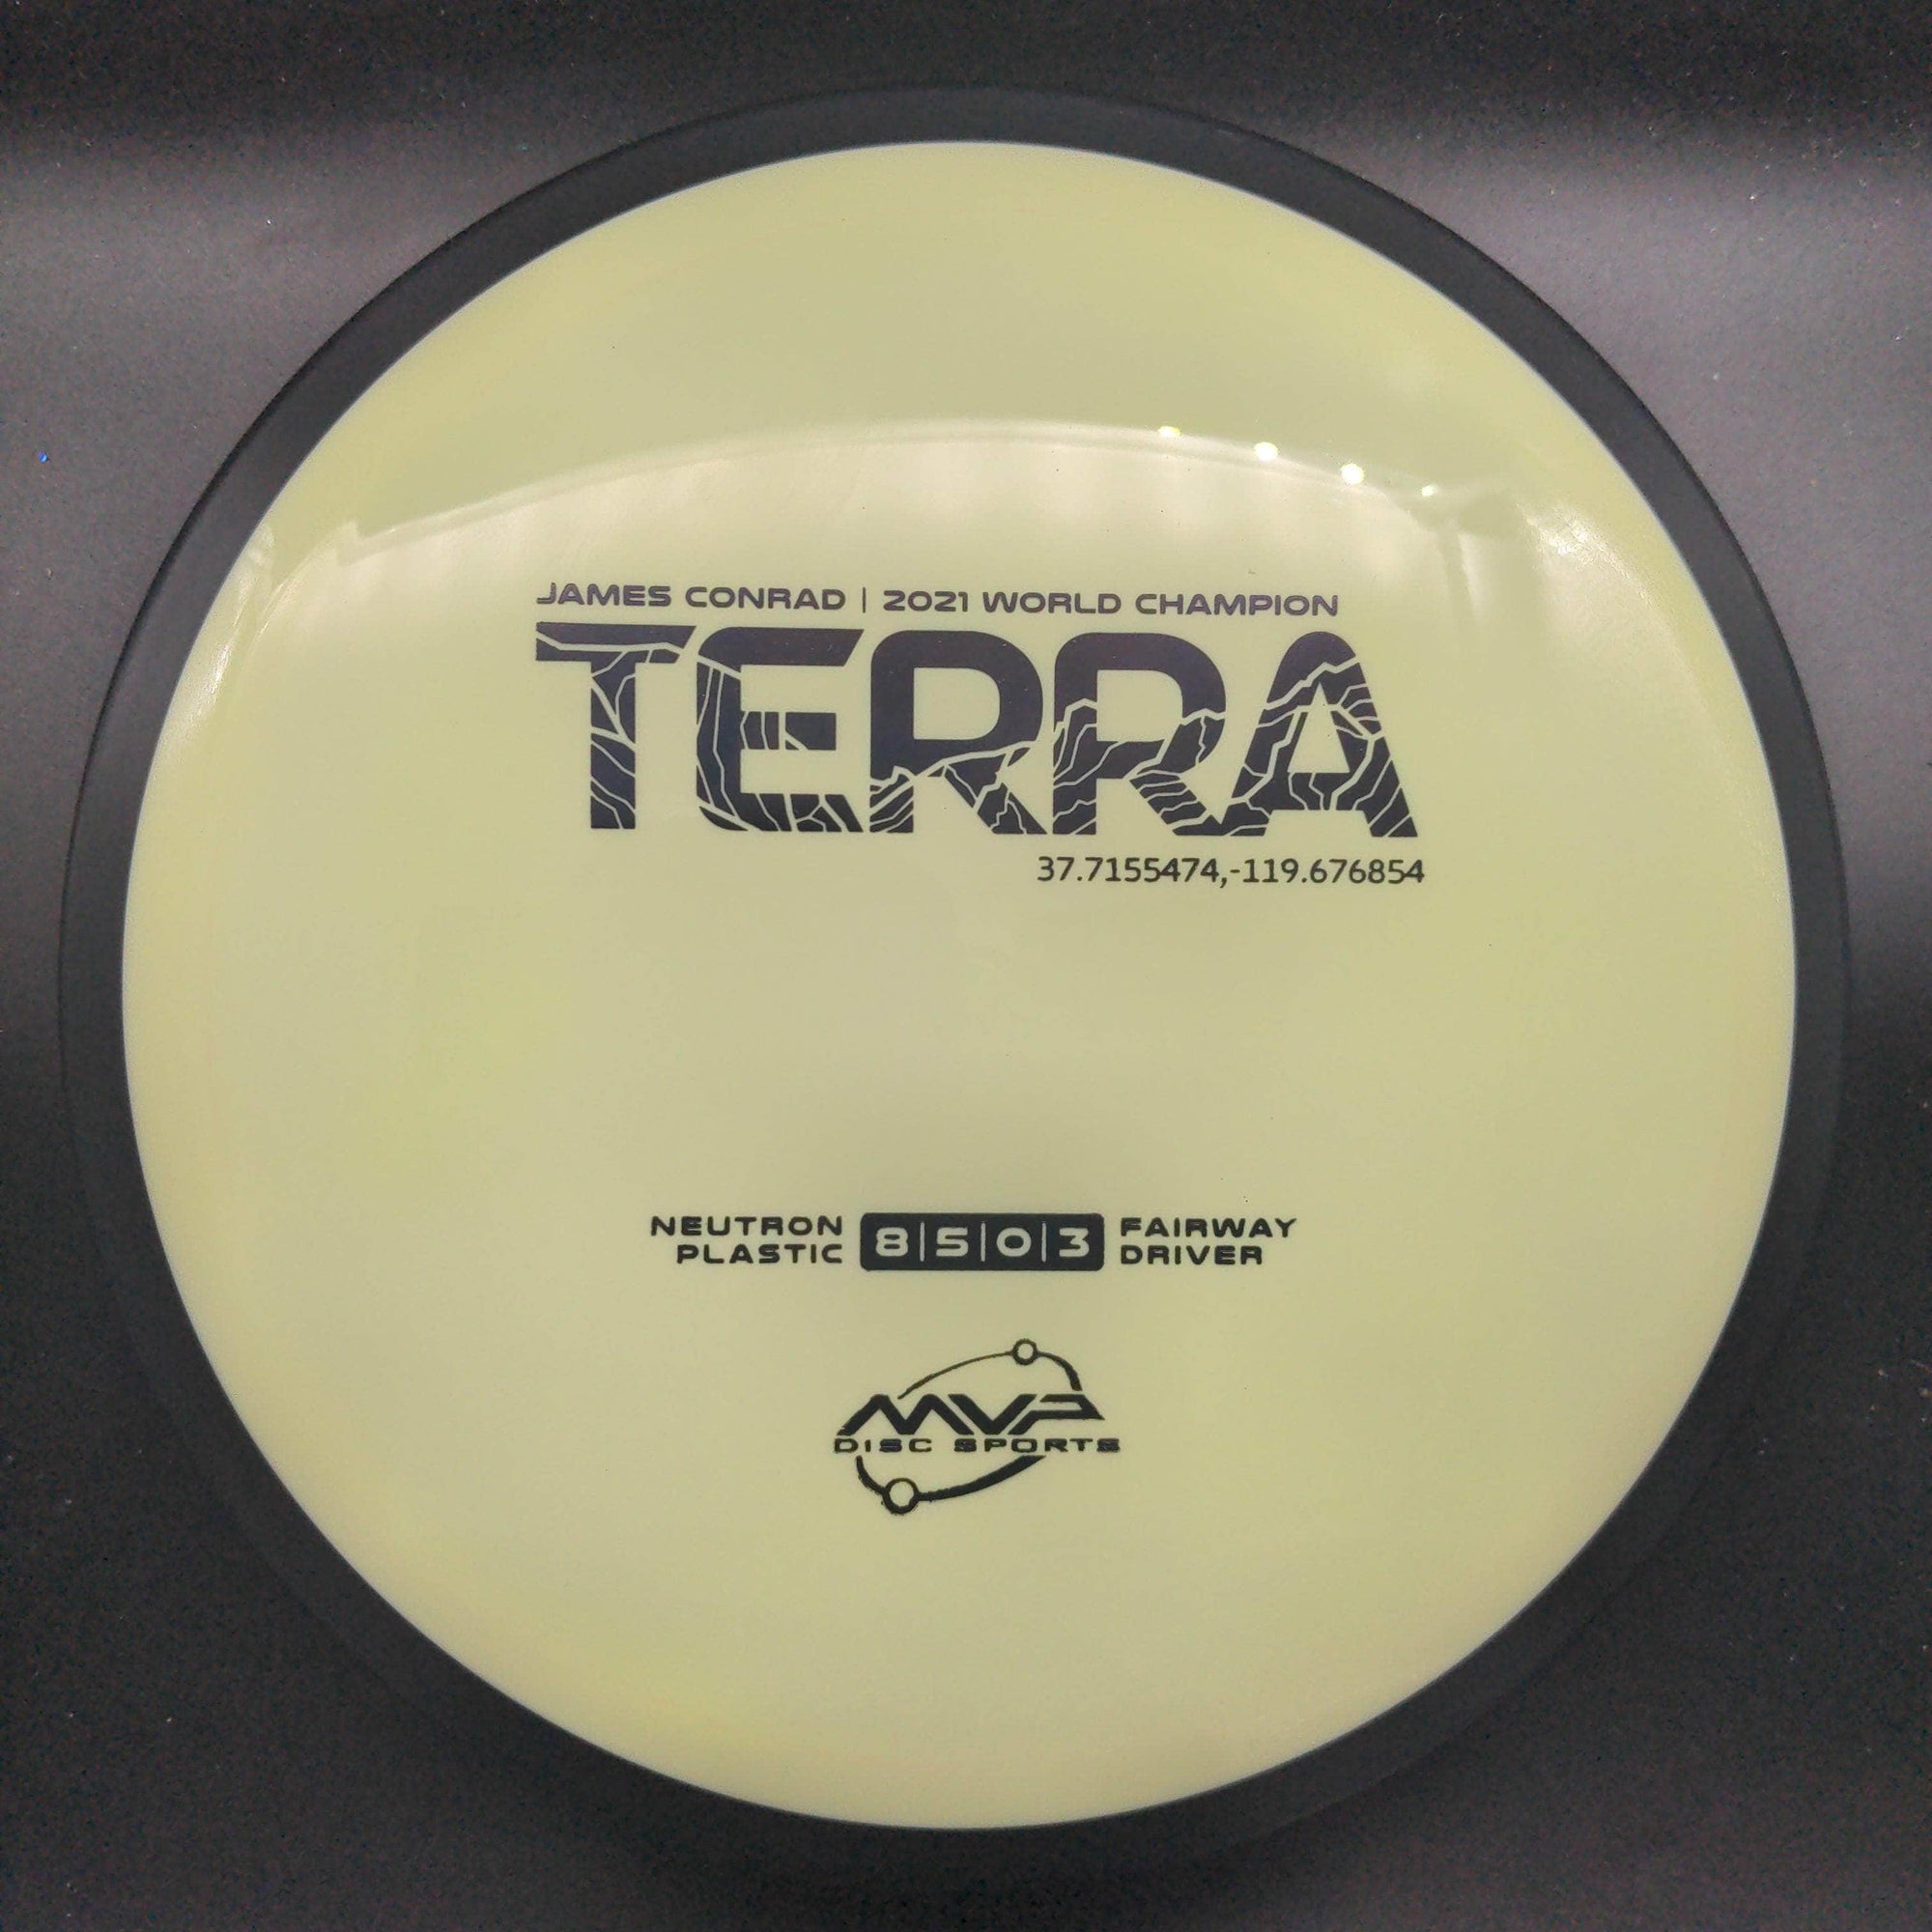 MVP Fairway Driver Light Yellow 173g Terra, Neutron Plastic, James Conrad World Champion Edition